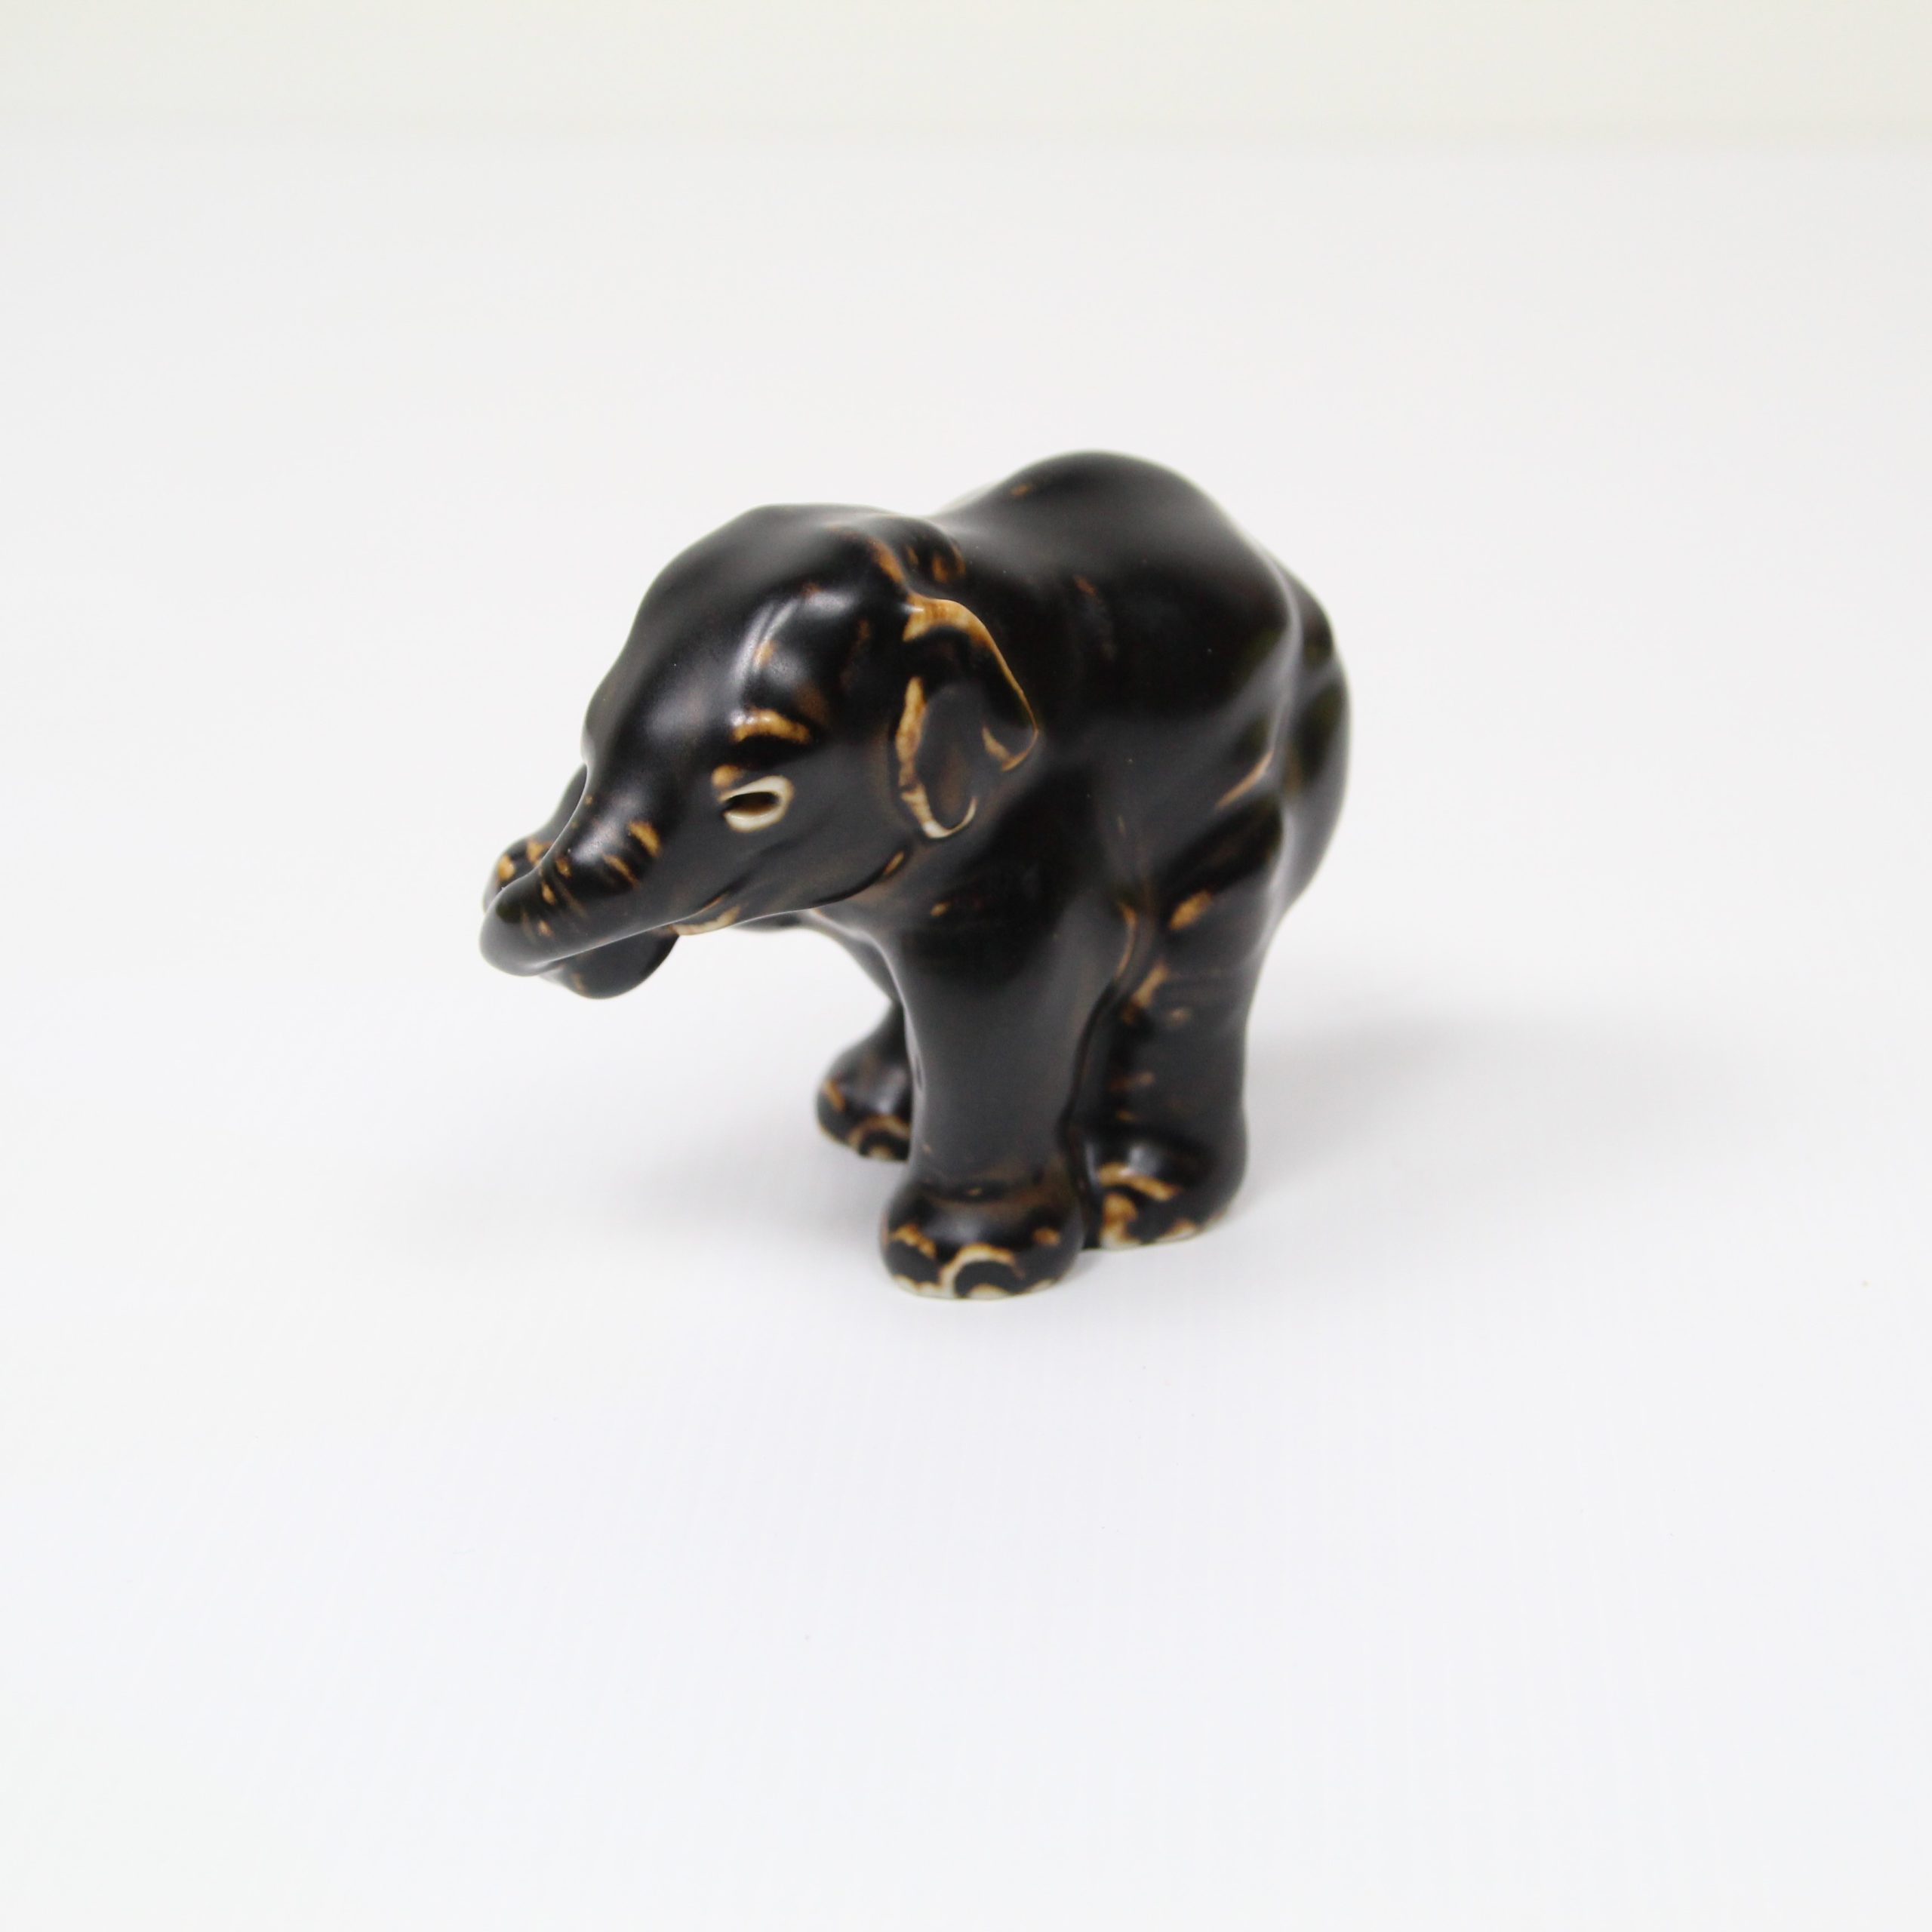 Elephant stoneware figurine 22741 by Jeanne Grut for Royal Copenhagen